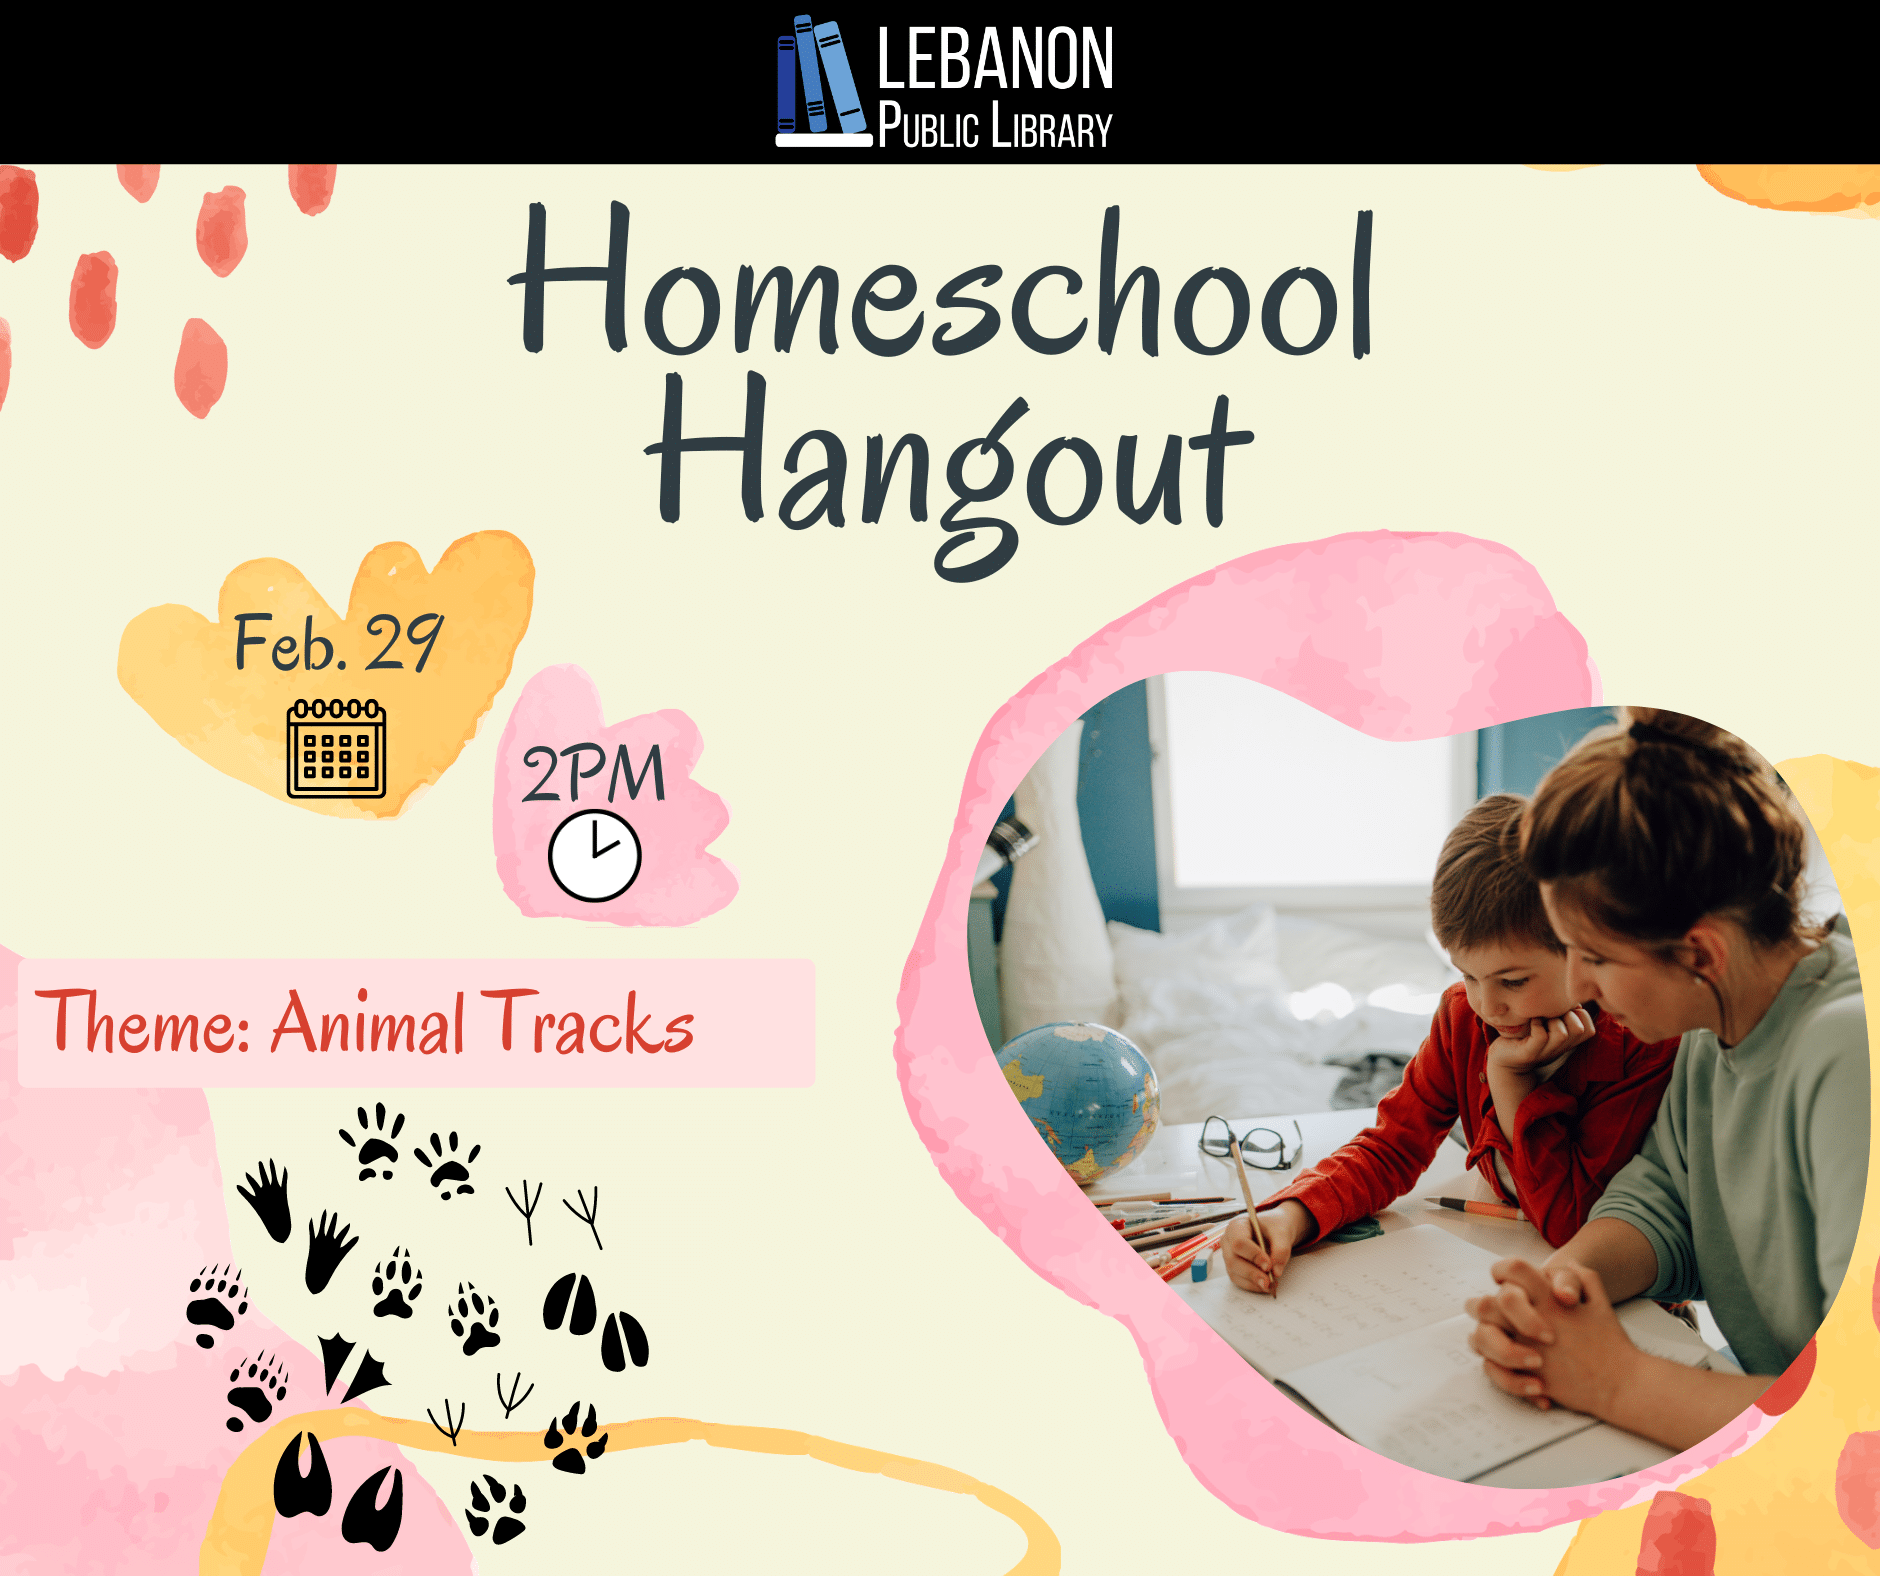 Homeschool Hangout, February 29th at 2 p.m.